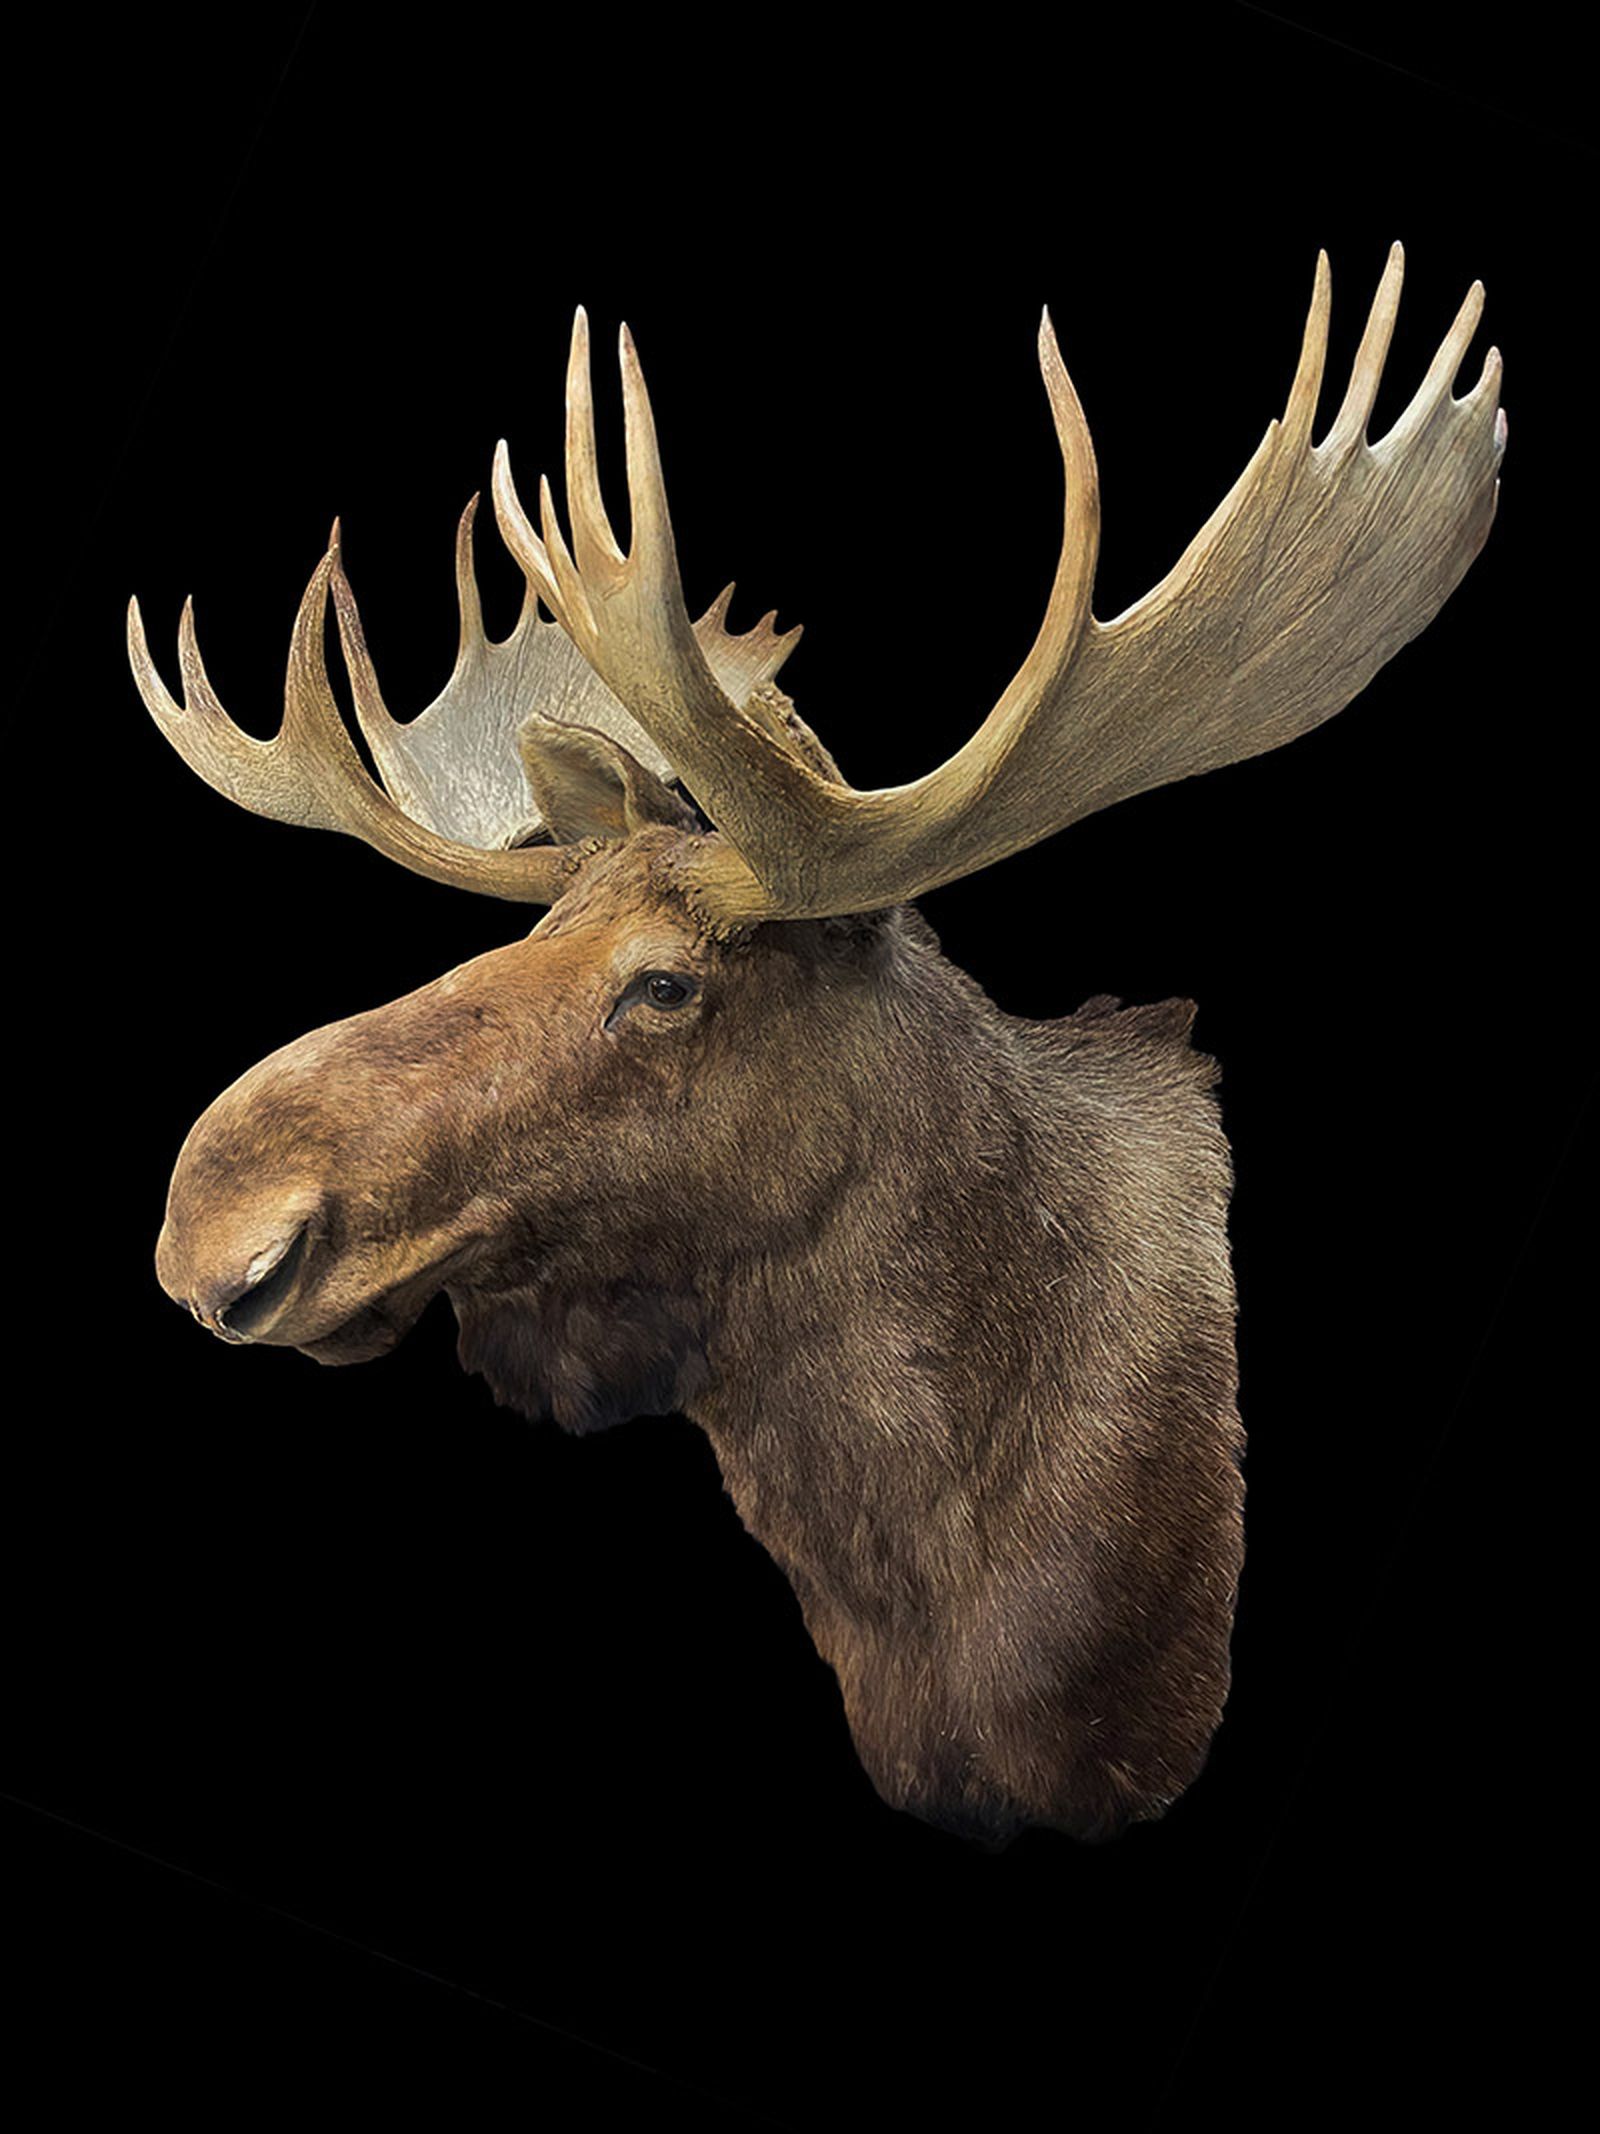 Andy Warhol's Moose